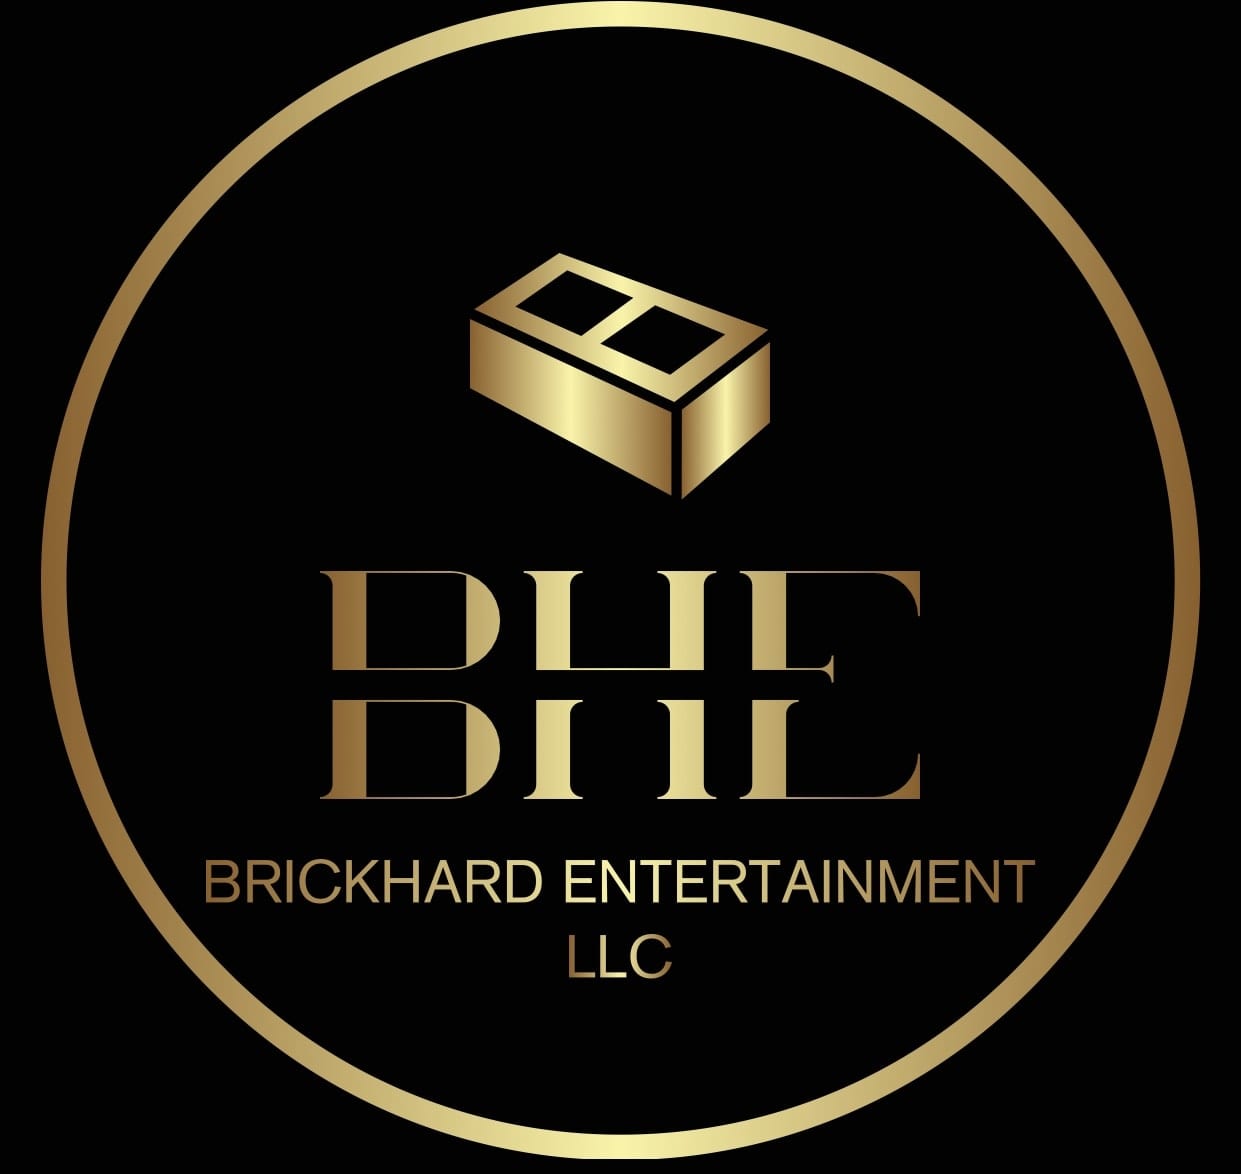 Brickhard Entertainment